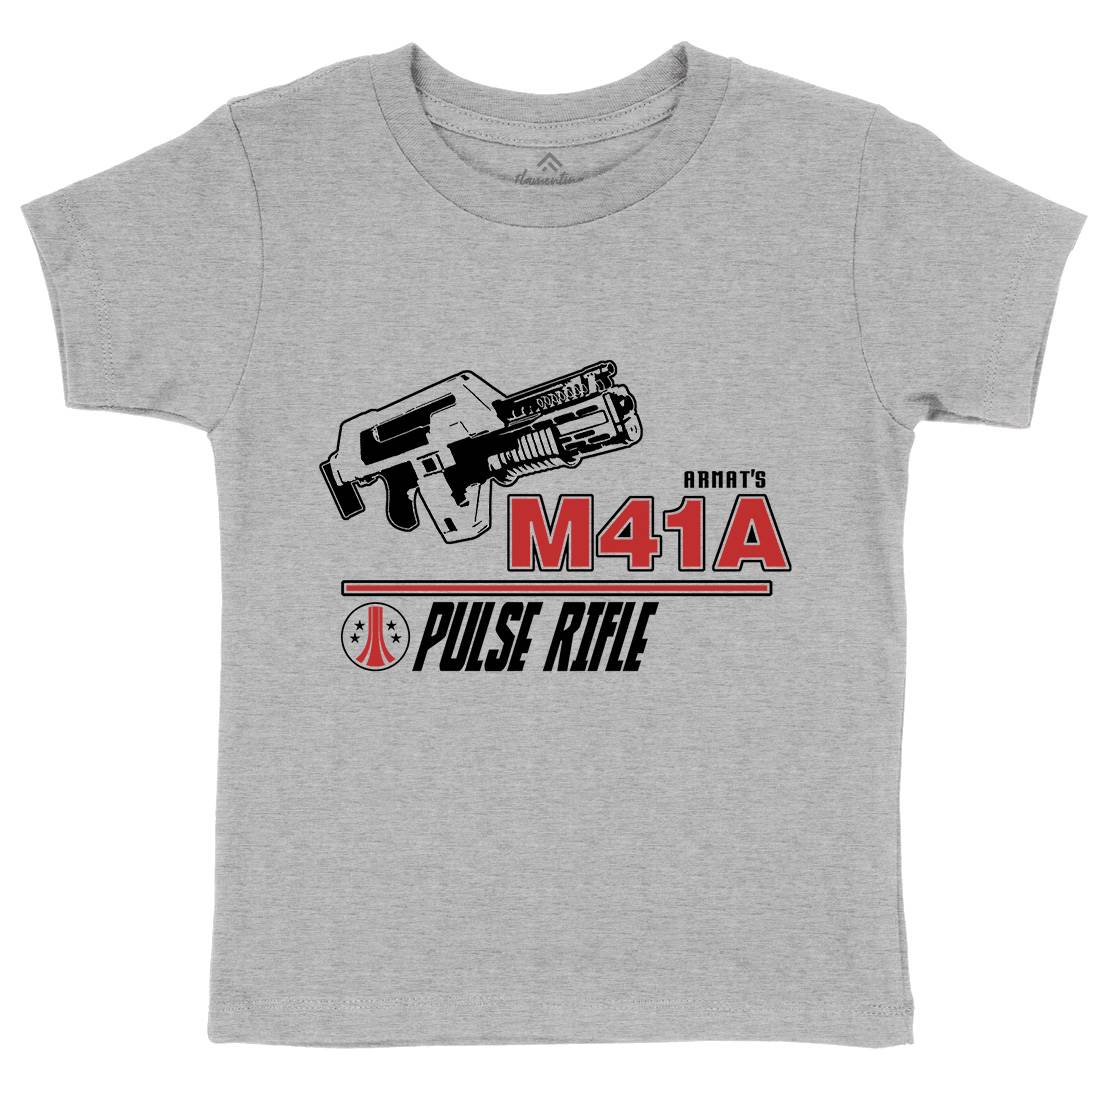 M41A Kids Organic Crew Neck T-Shirt Army D153